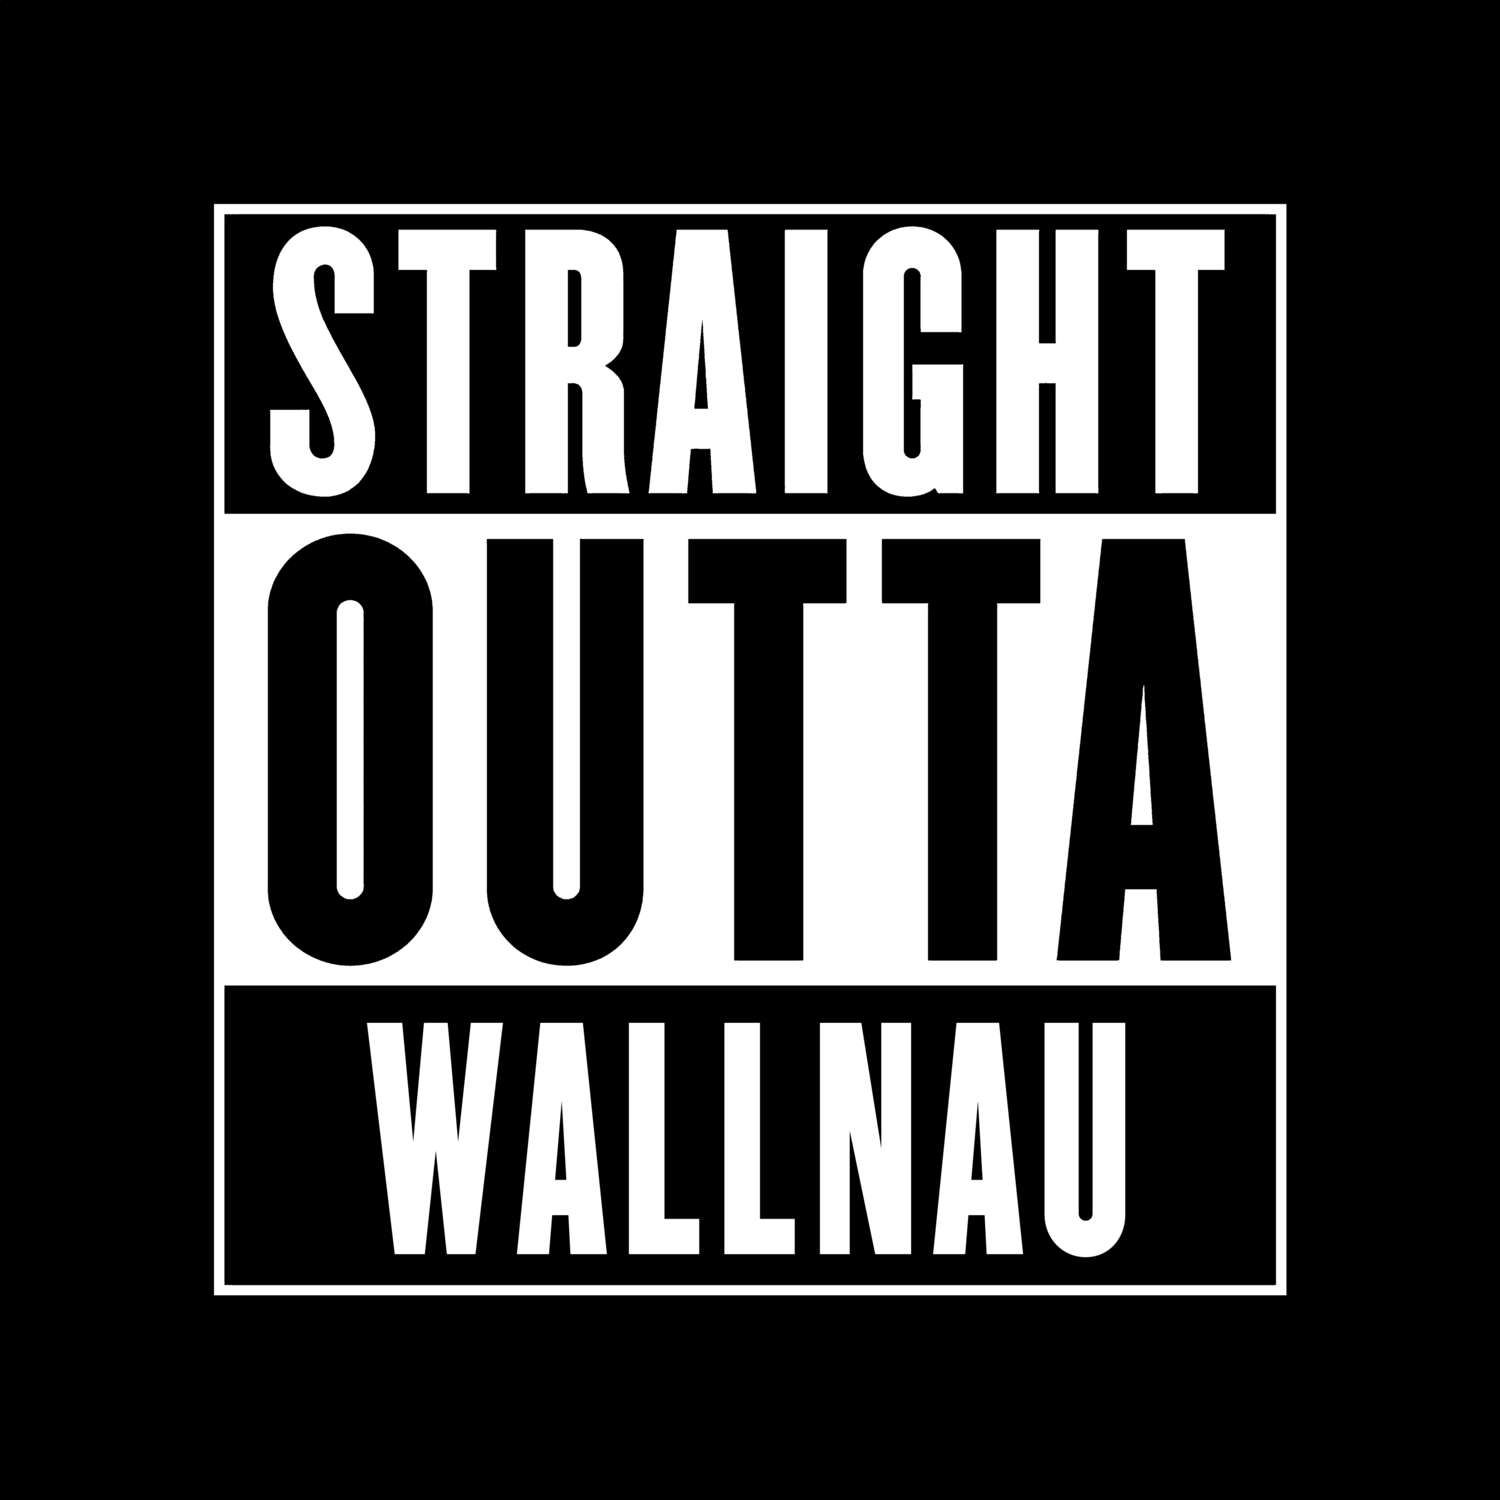 Wallnau T-Shirt »Straight Outta«